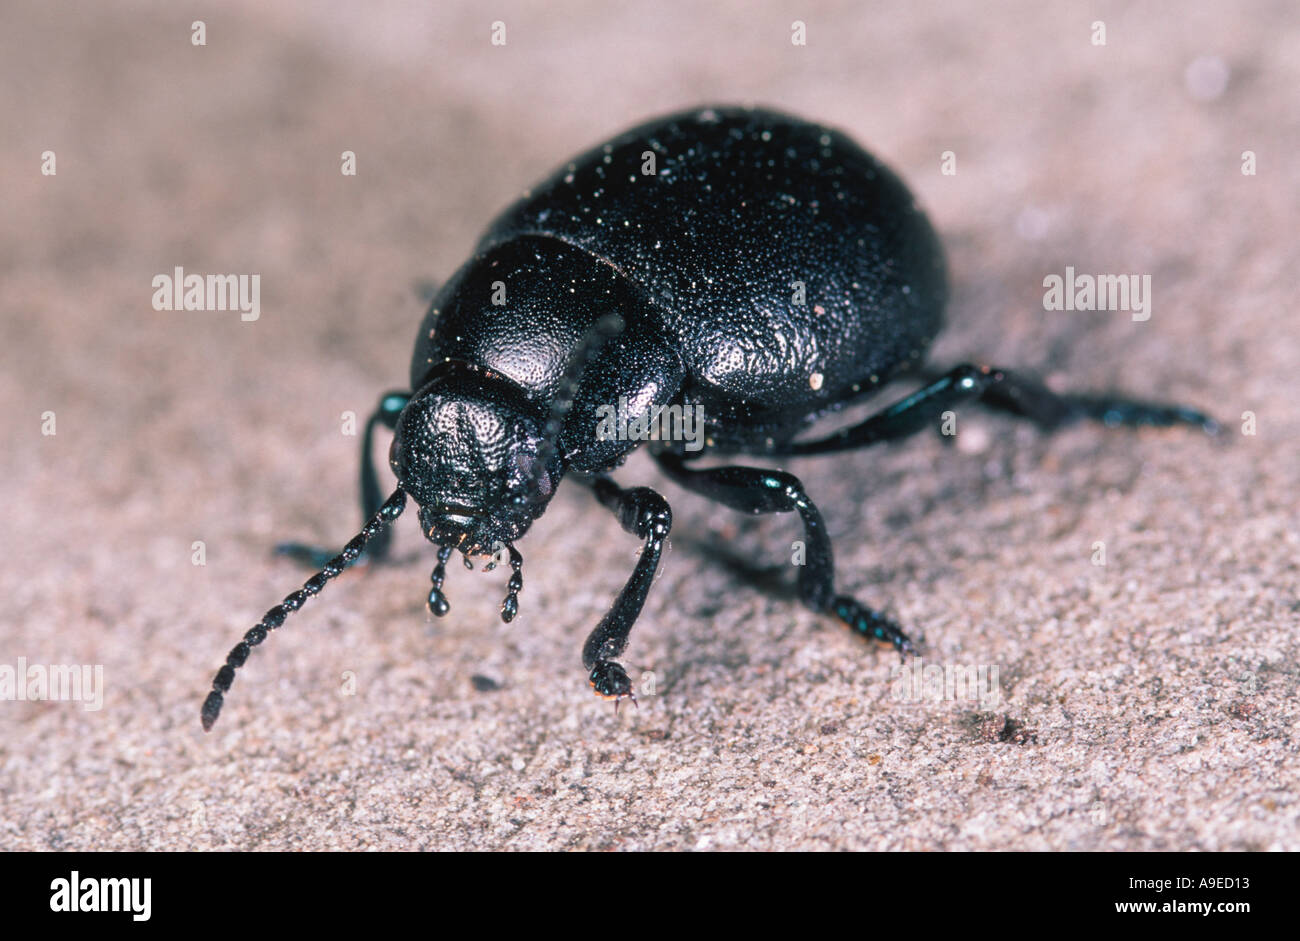 Black coleopteran beetle on ground Spain Stock Photo